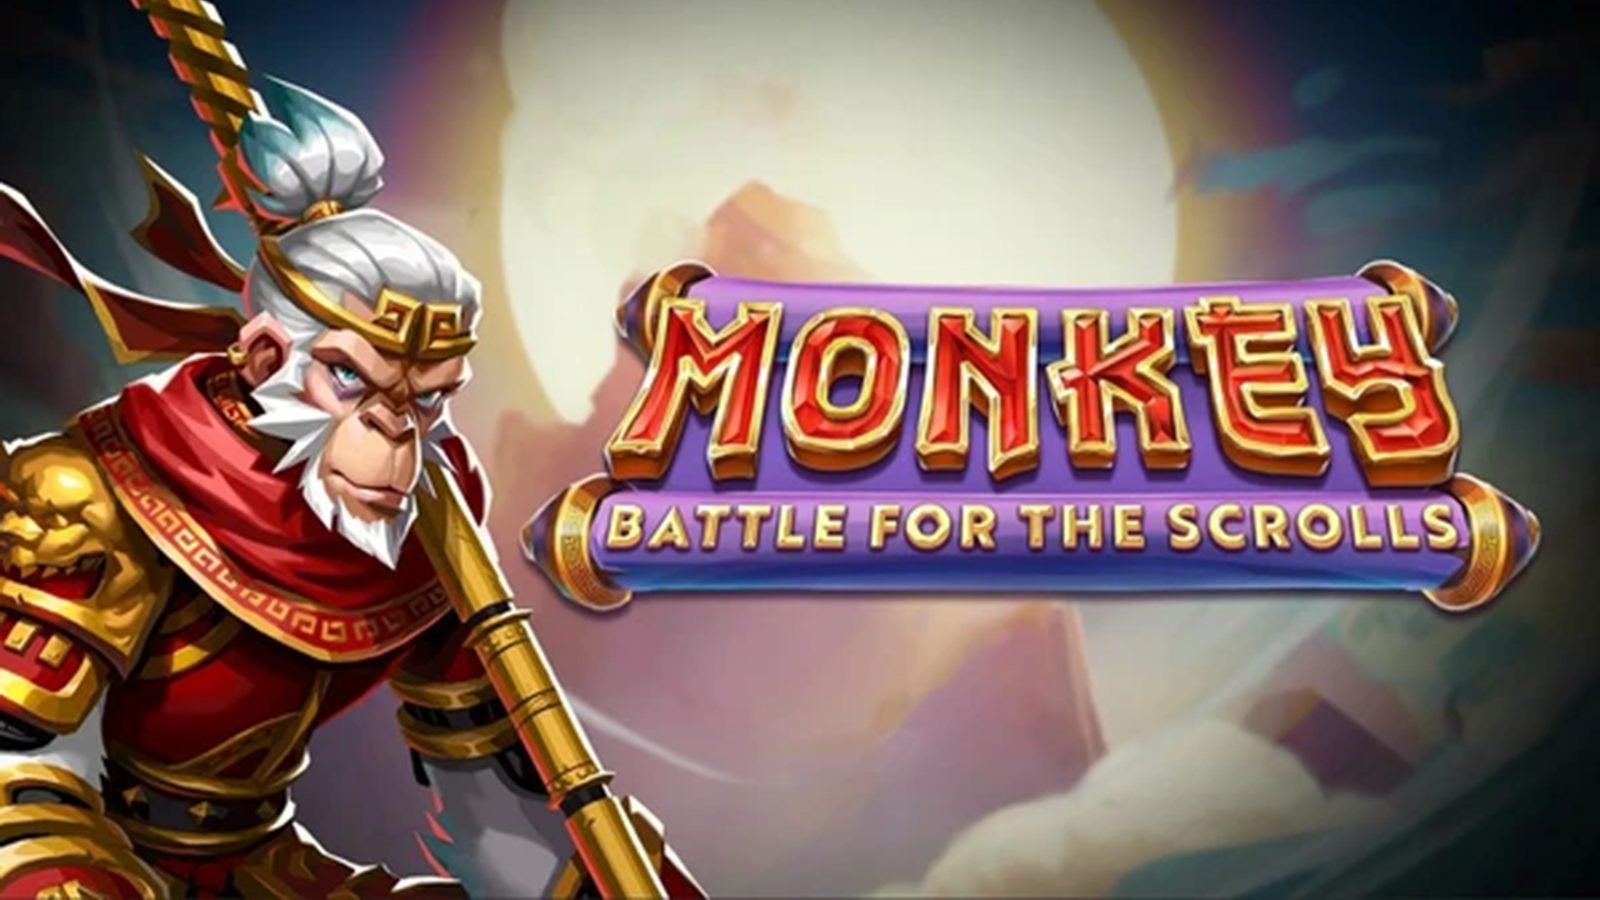 Play'n GO - Monkey Battle for the Scrolls